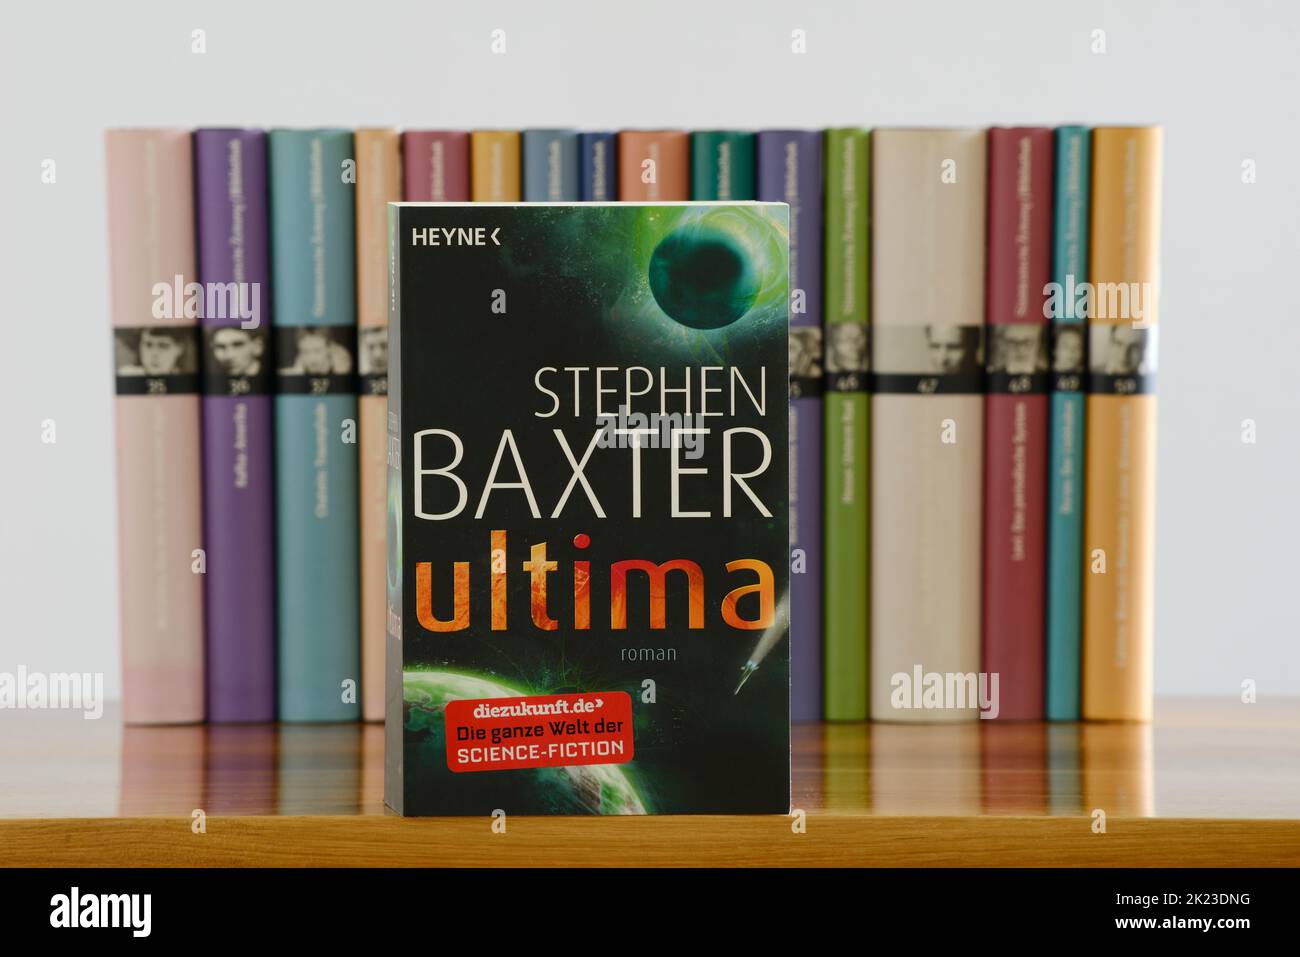 Stephen Baxter Ultima Novel Stock Photo